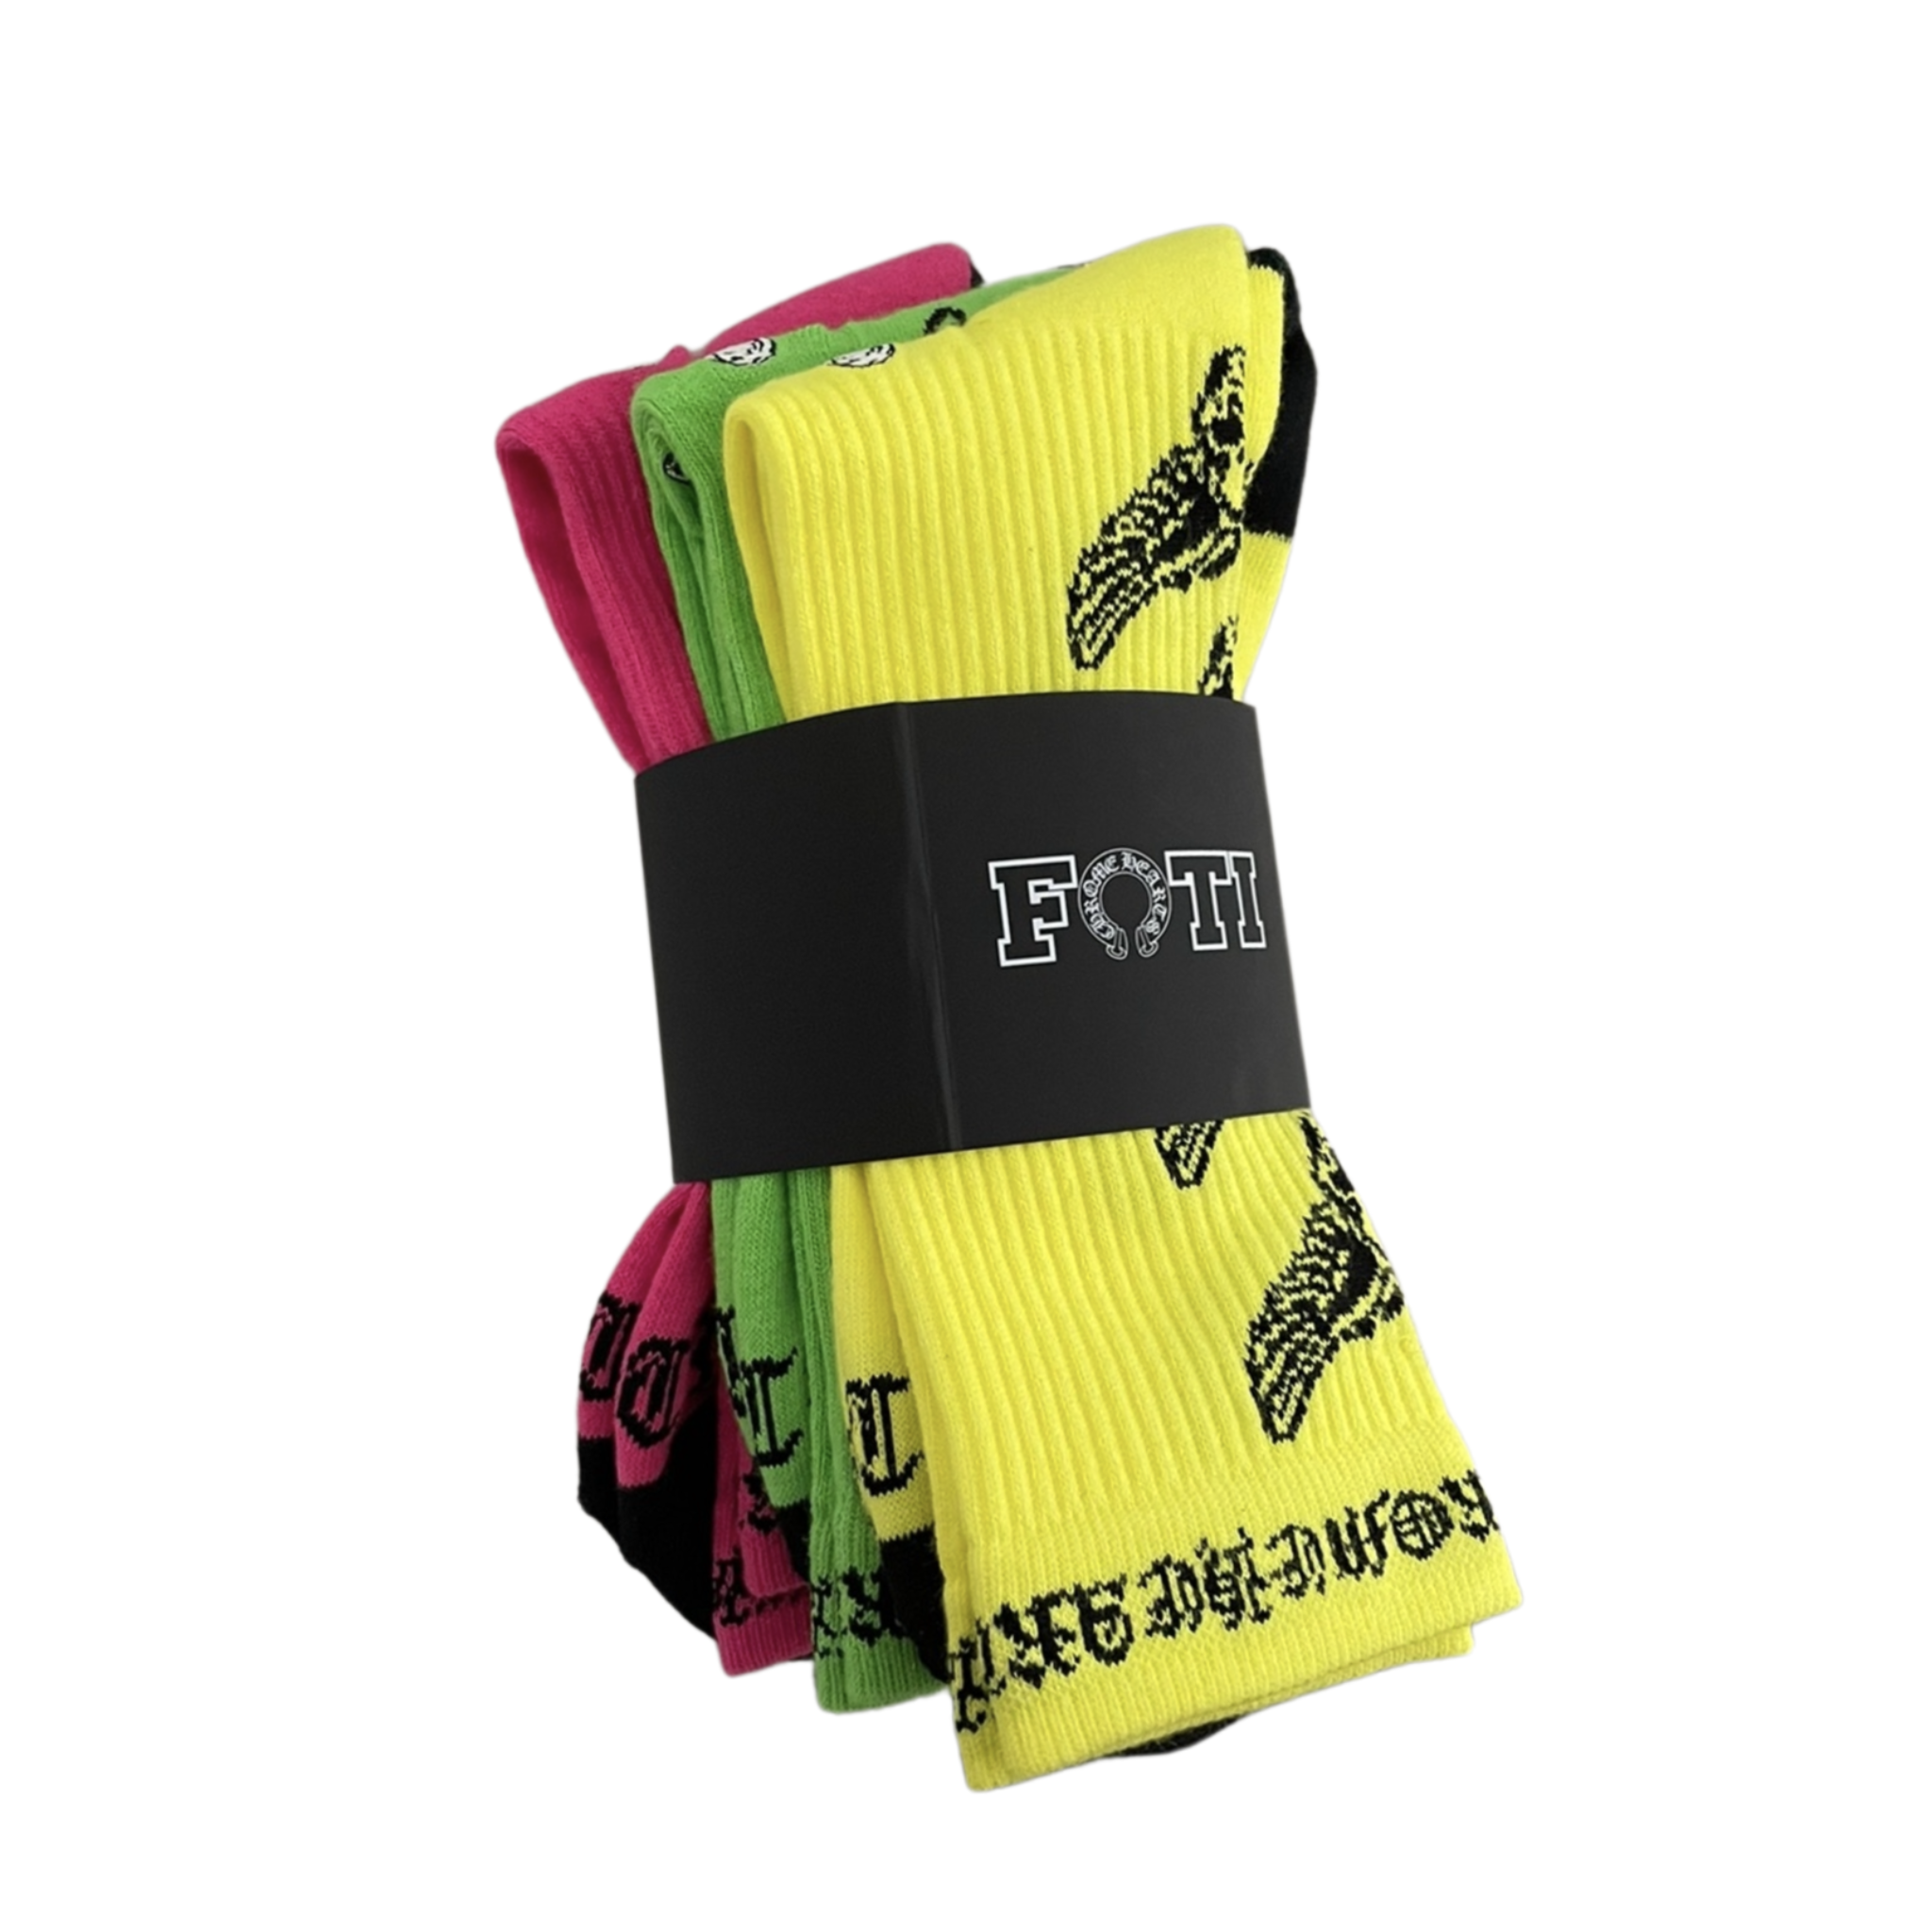 Chrome Hearts Foti Socks (3 pack) Neon Pink/Yellow/Green - US